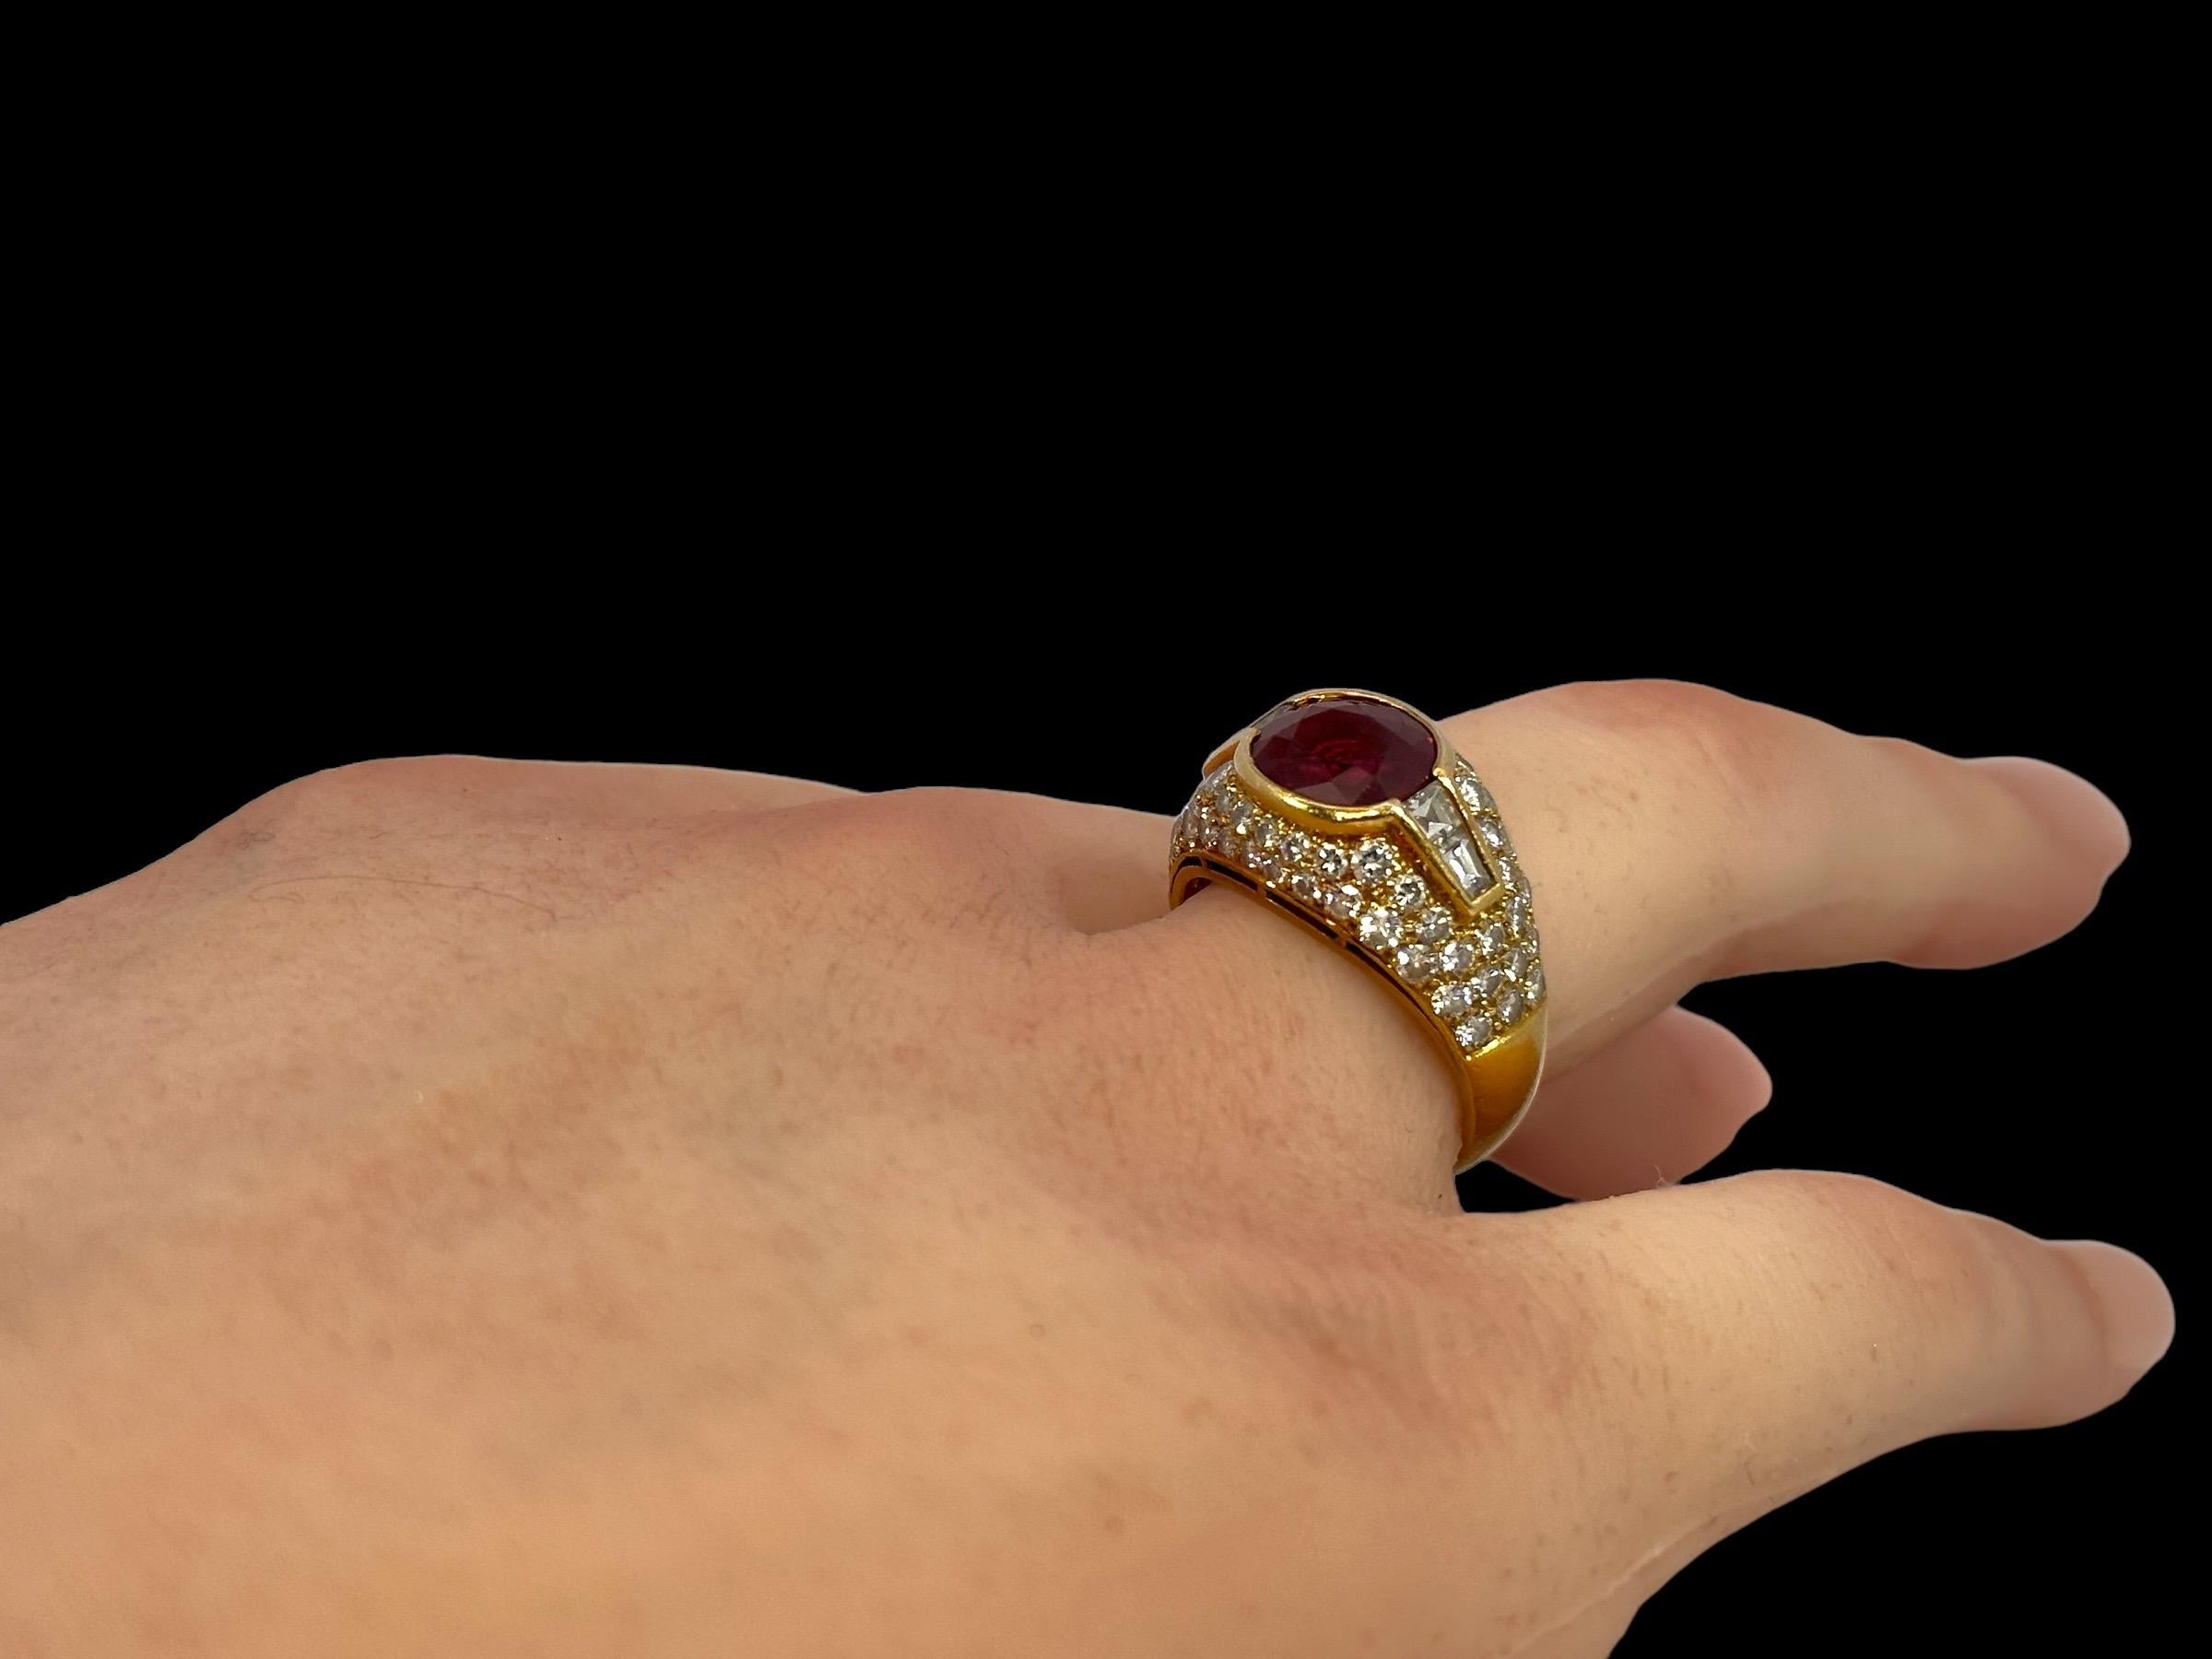 Bvlgari Trombino 18kt Yellow Gold Ring 2.09ct Ruby & Diamonds With GRS Cert For Sale 6